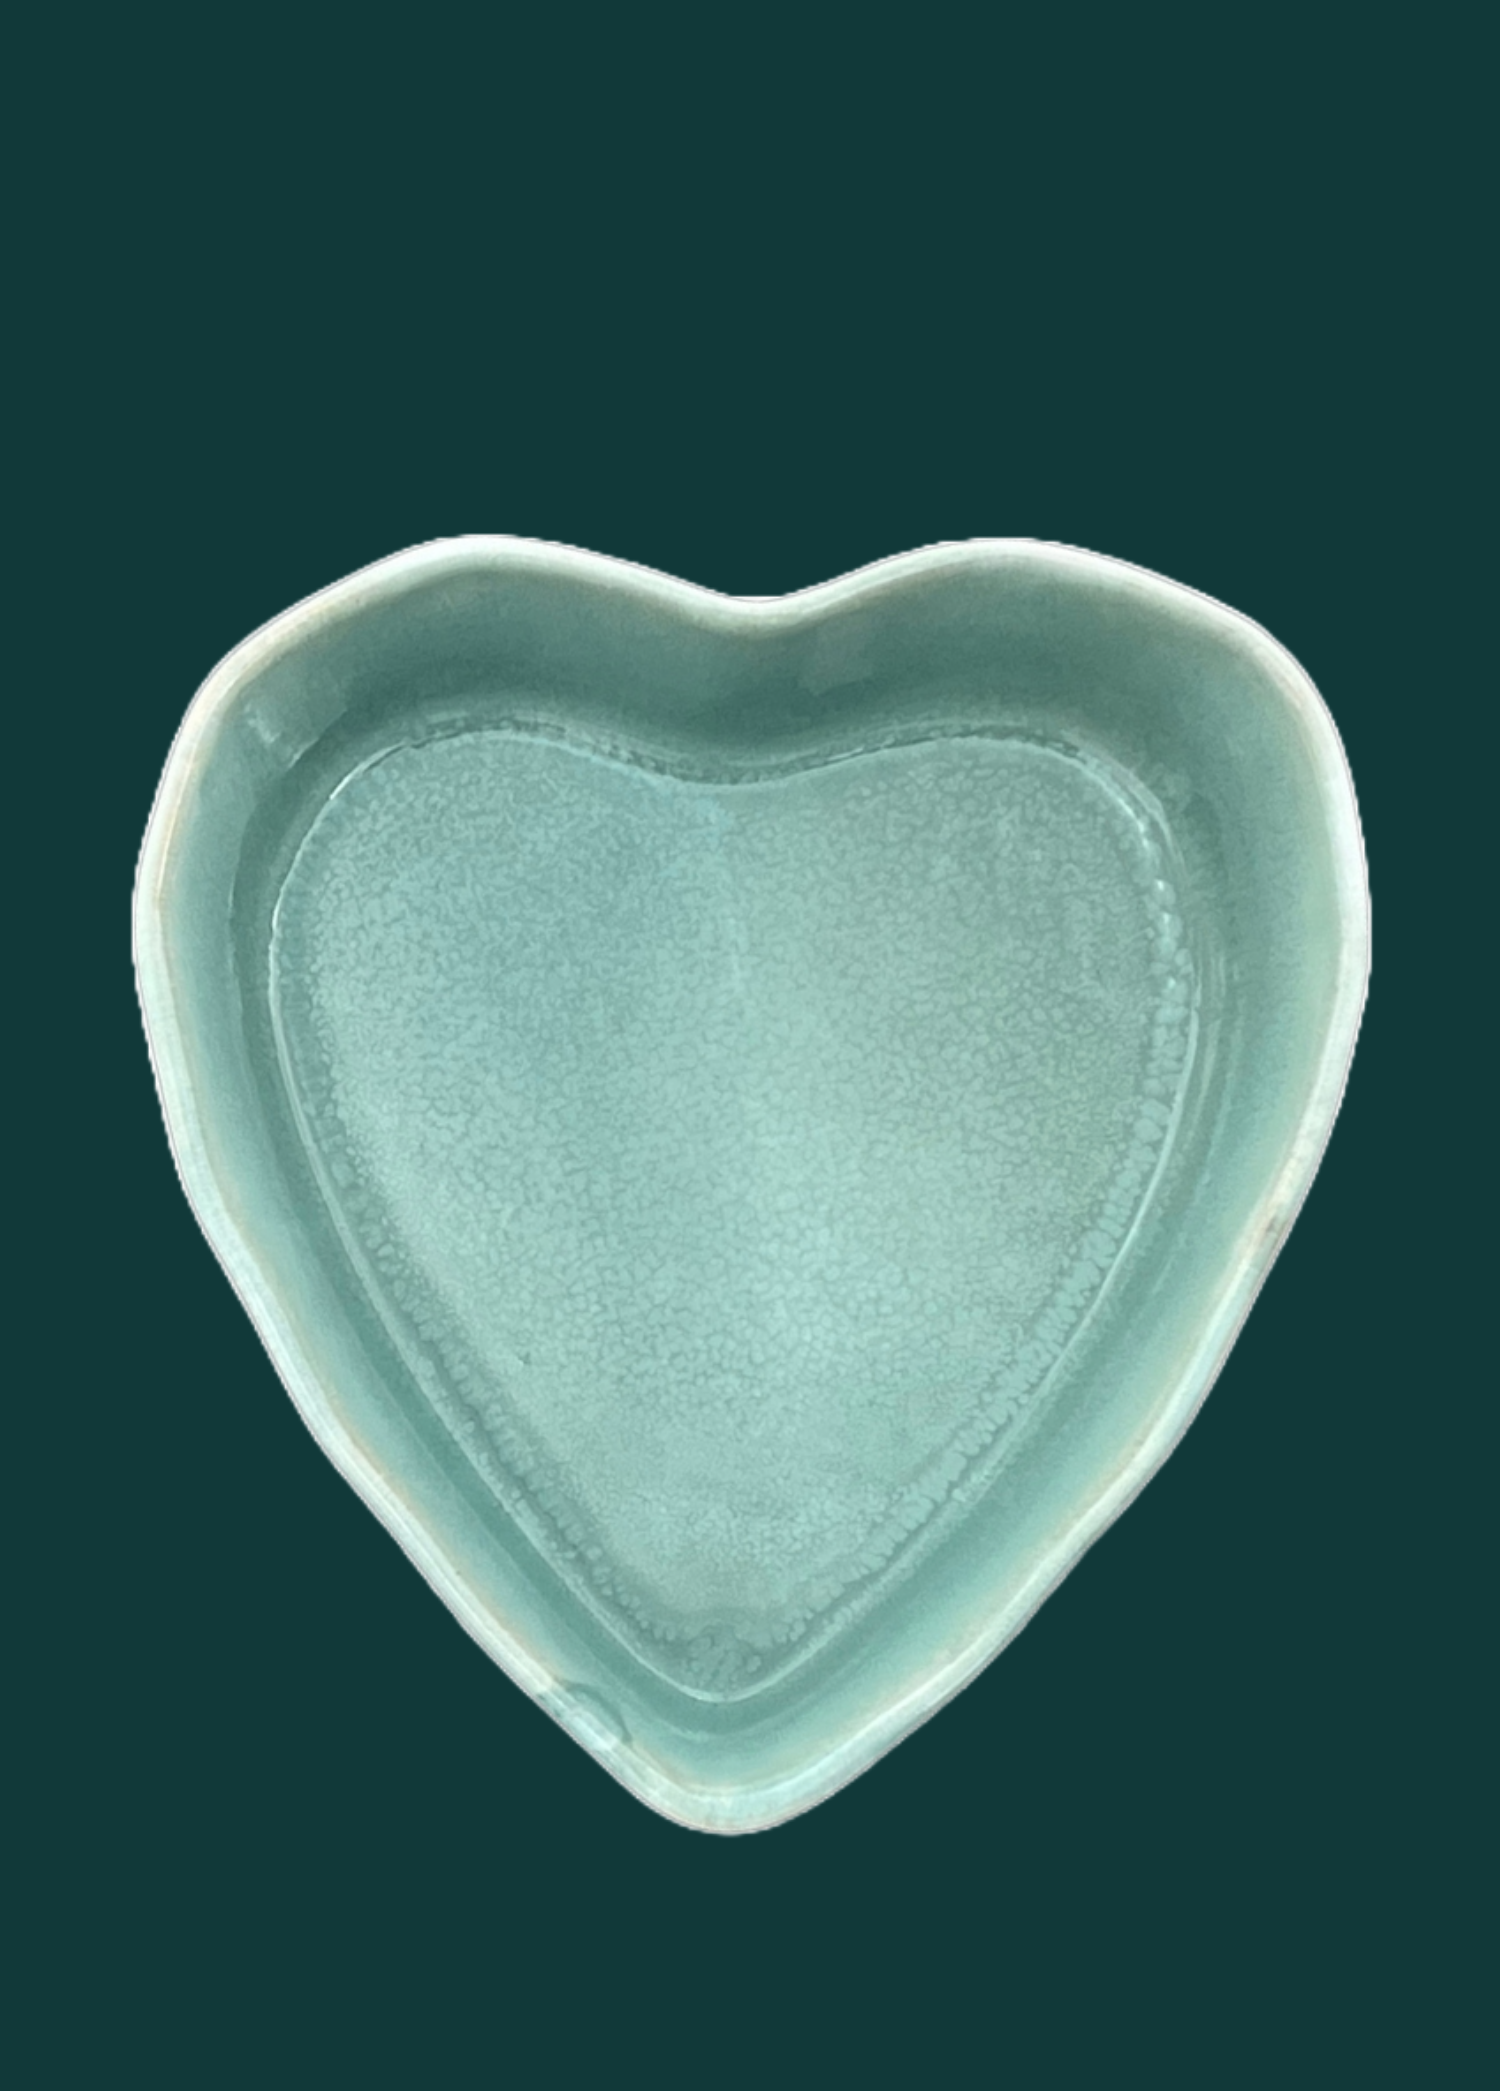 Herzschüssel große Liebe - Immergrün mit Backmischung Lisara Vitalbrot